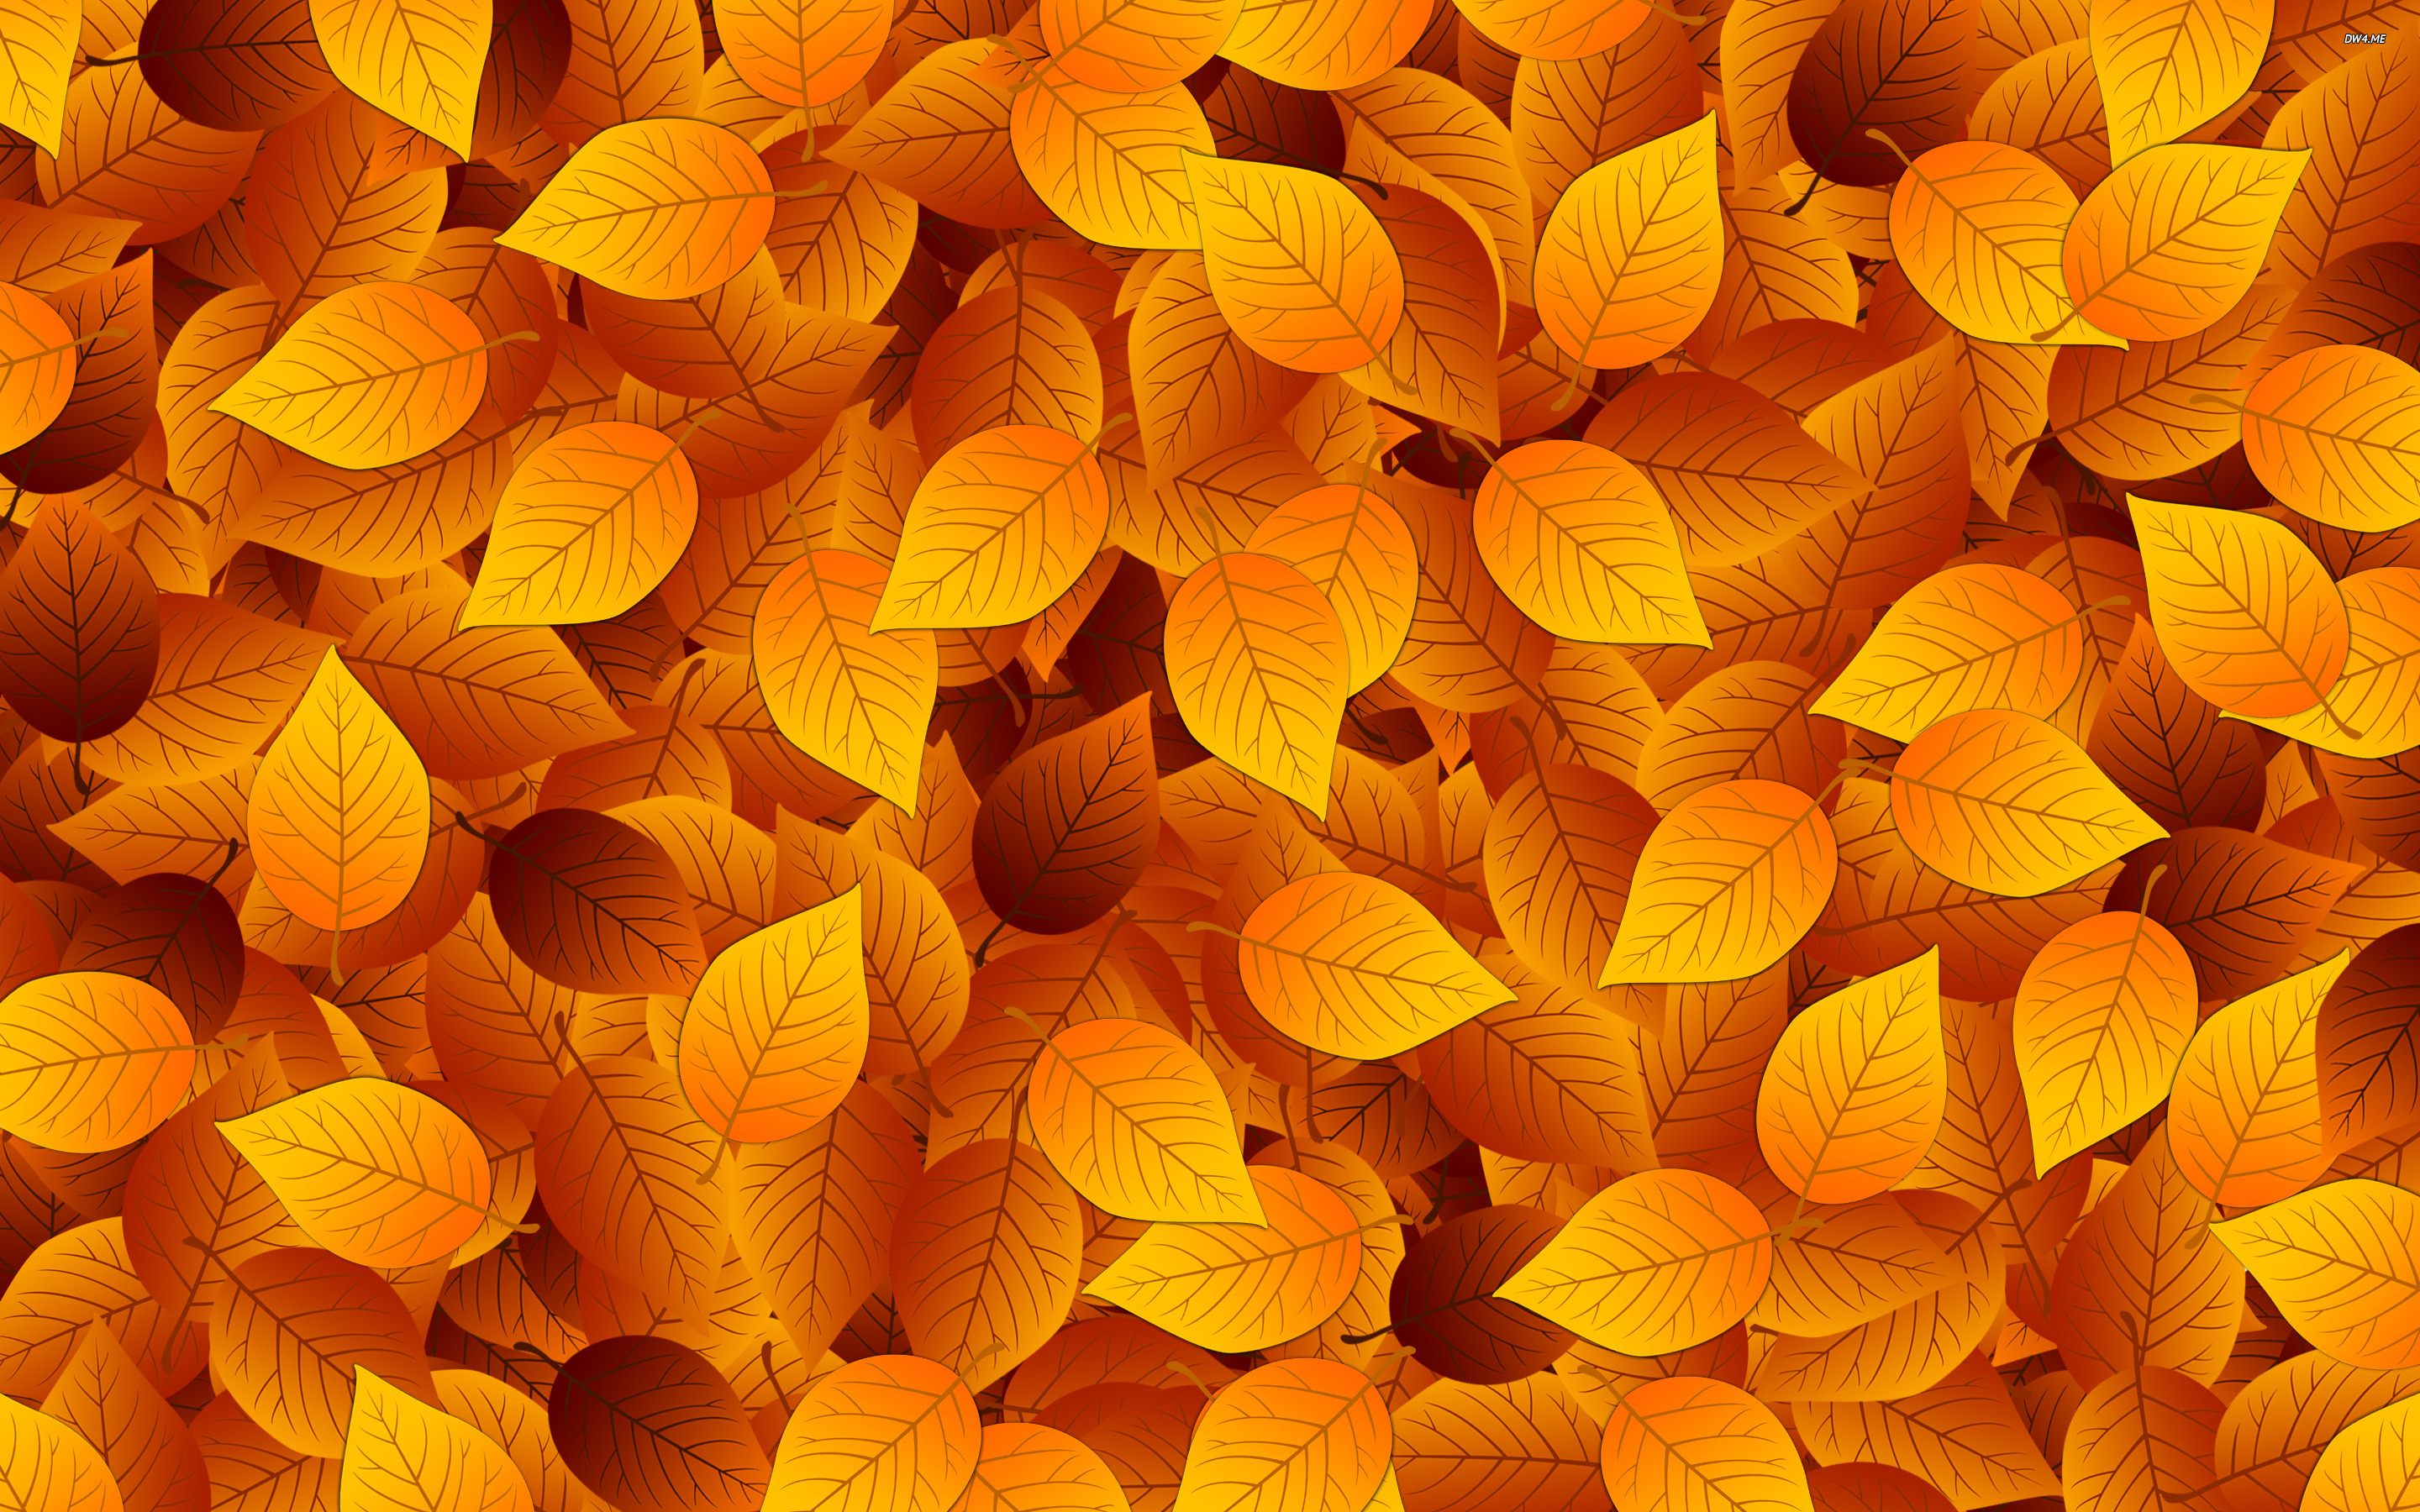 67+] Autumn Leaf Background - WallpaperSafari